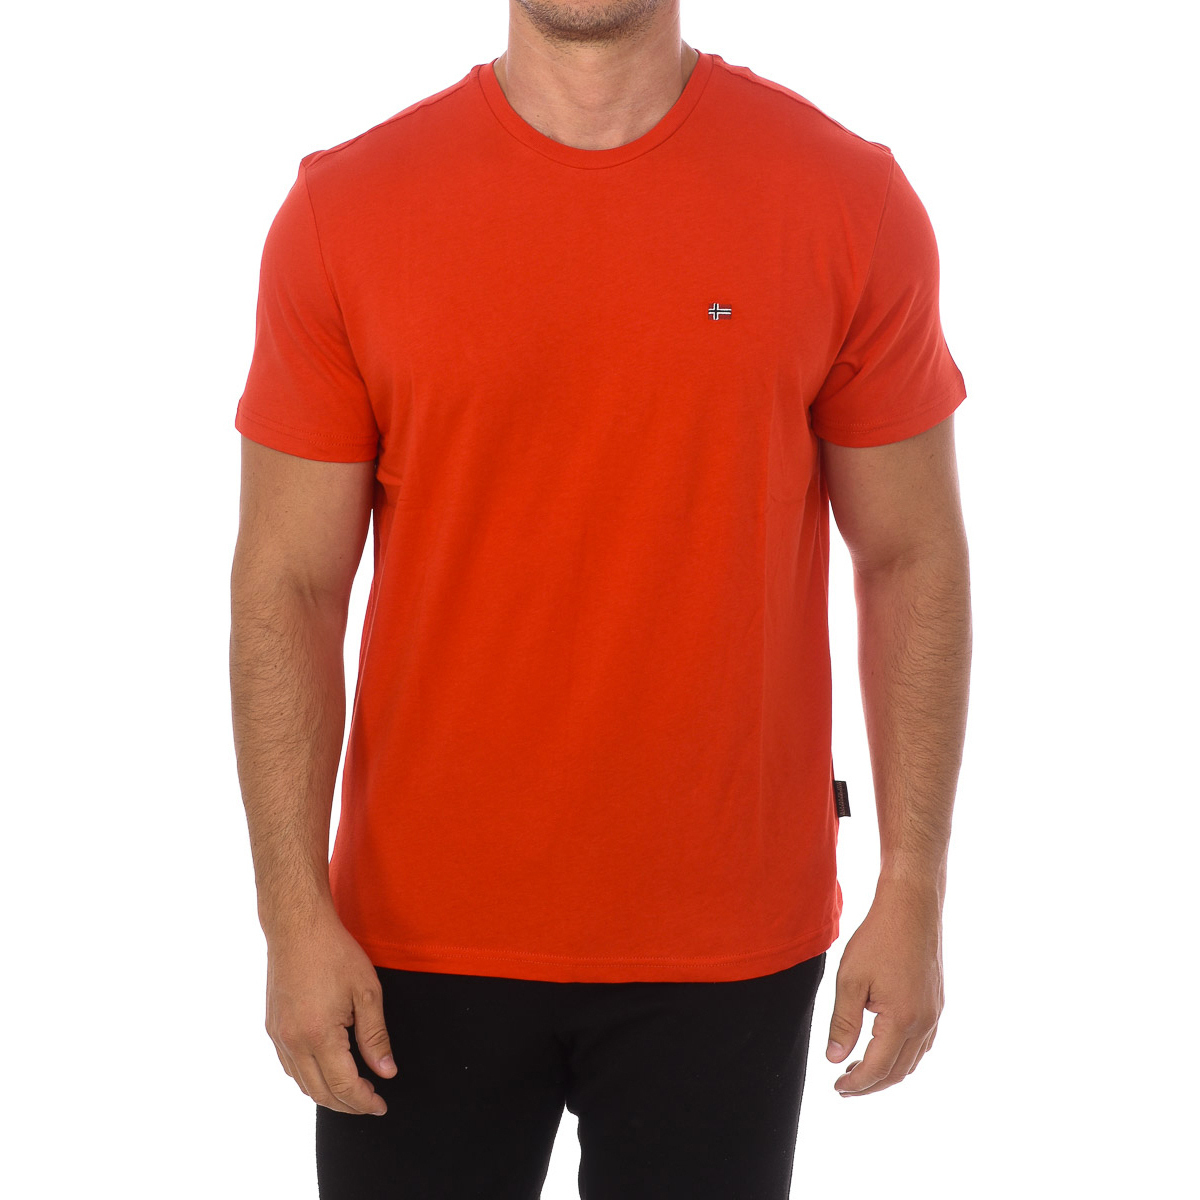 Vêtements Homme Body Action Graphic Ανδρικό T-Shirt NP0A4FRP-RR9 Rouge